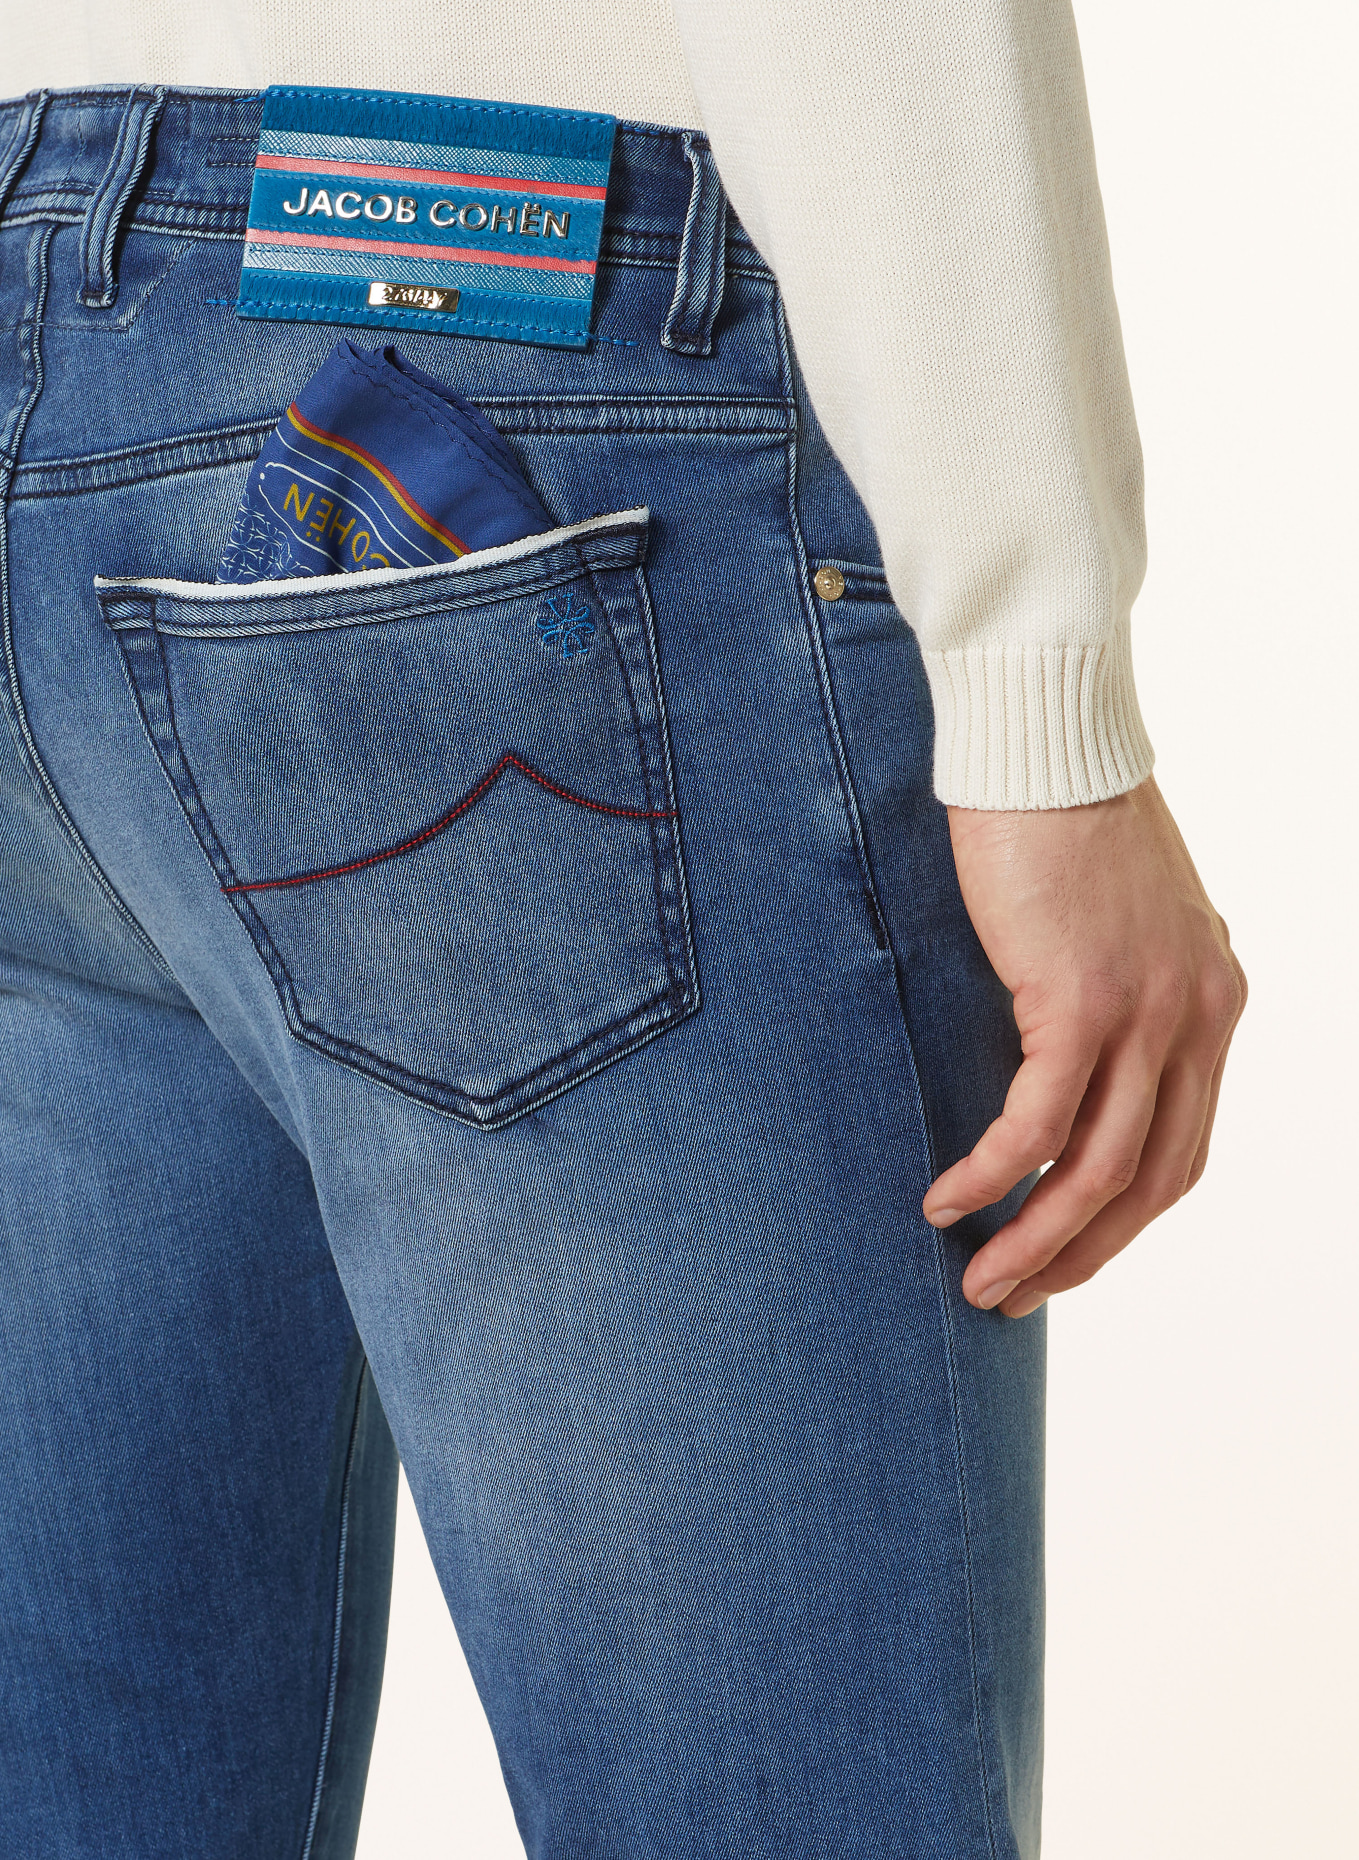 JACOB COHEN Jeans BARD Slim Fit, Farbe: 757D Mid Blue (Bild 6)